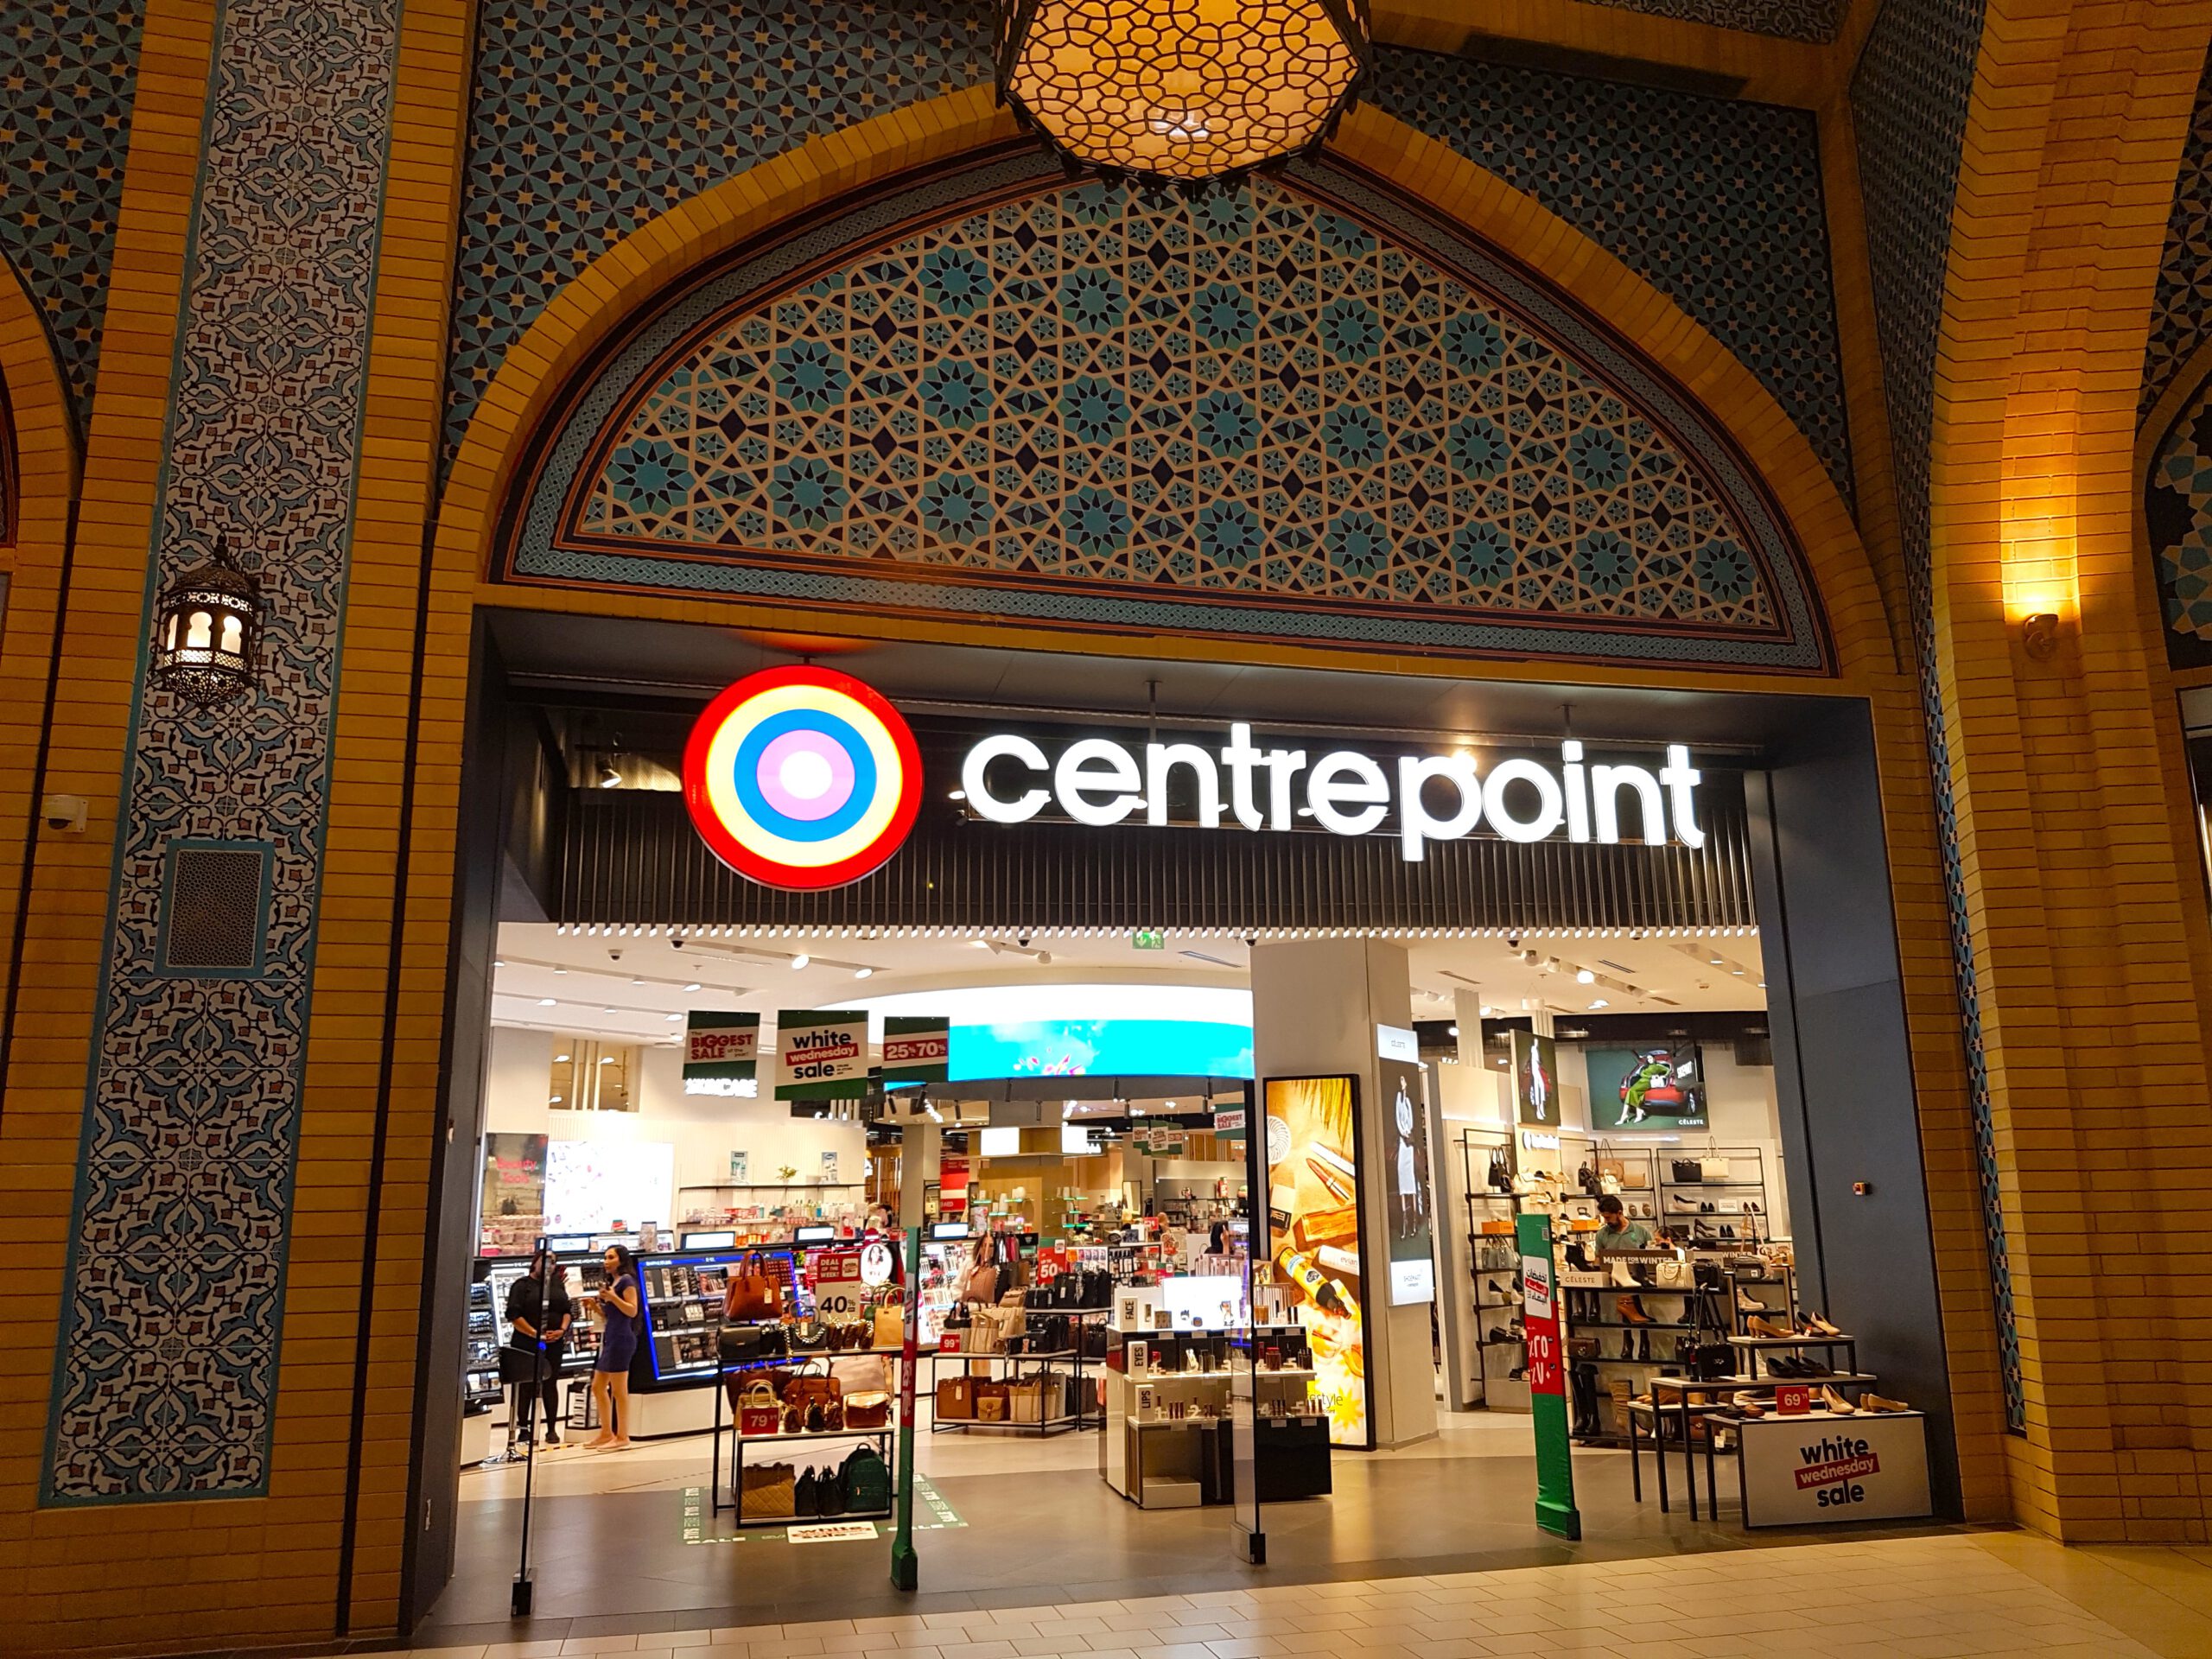 Ibn Battuta Mall in Dubai - Centrepoint